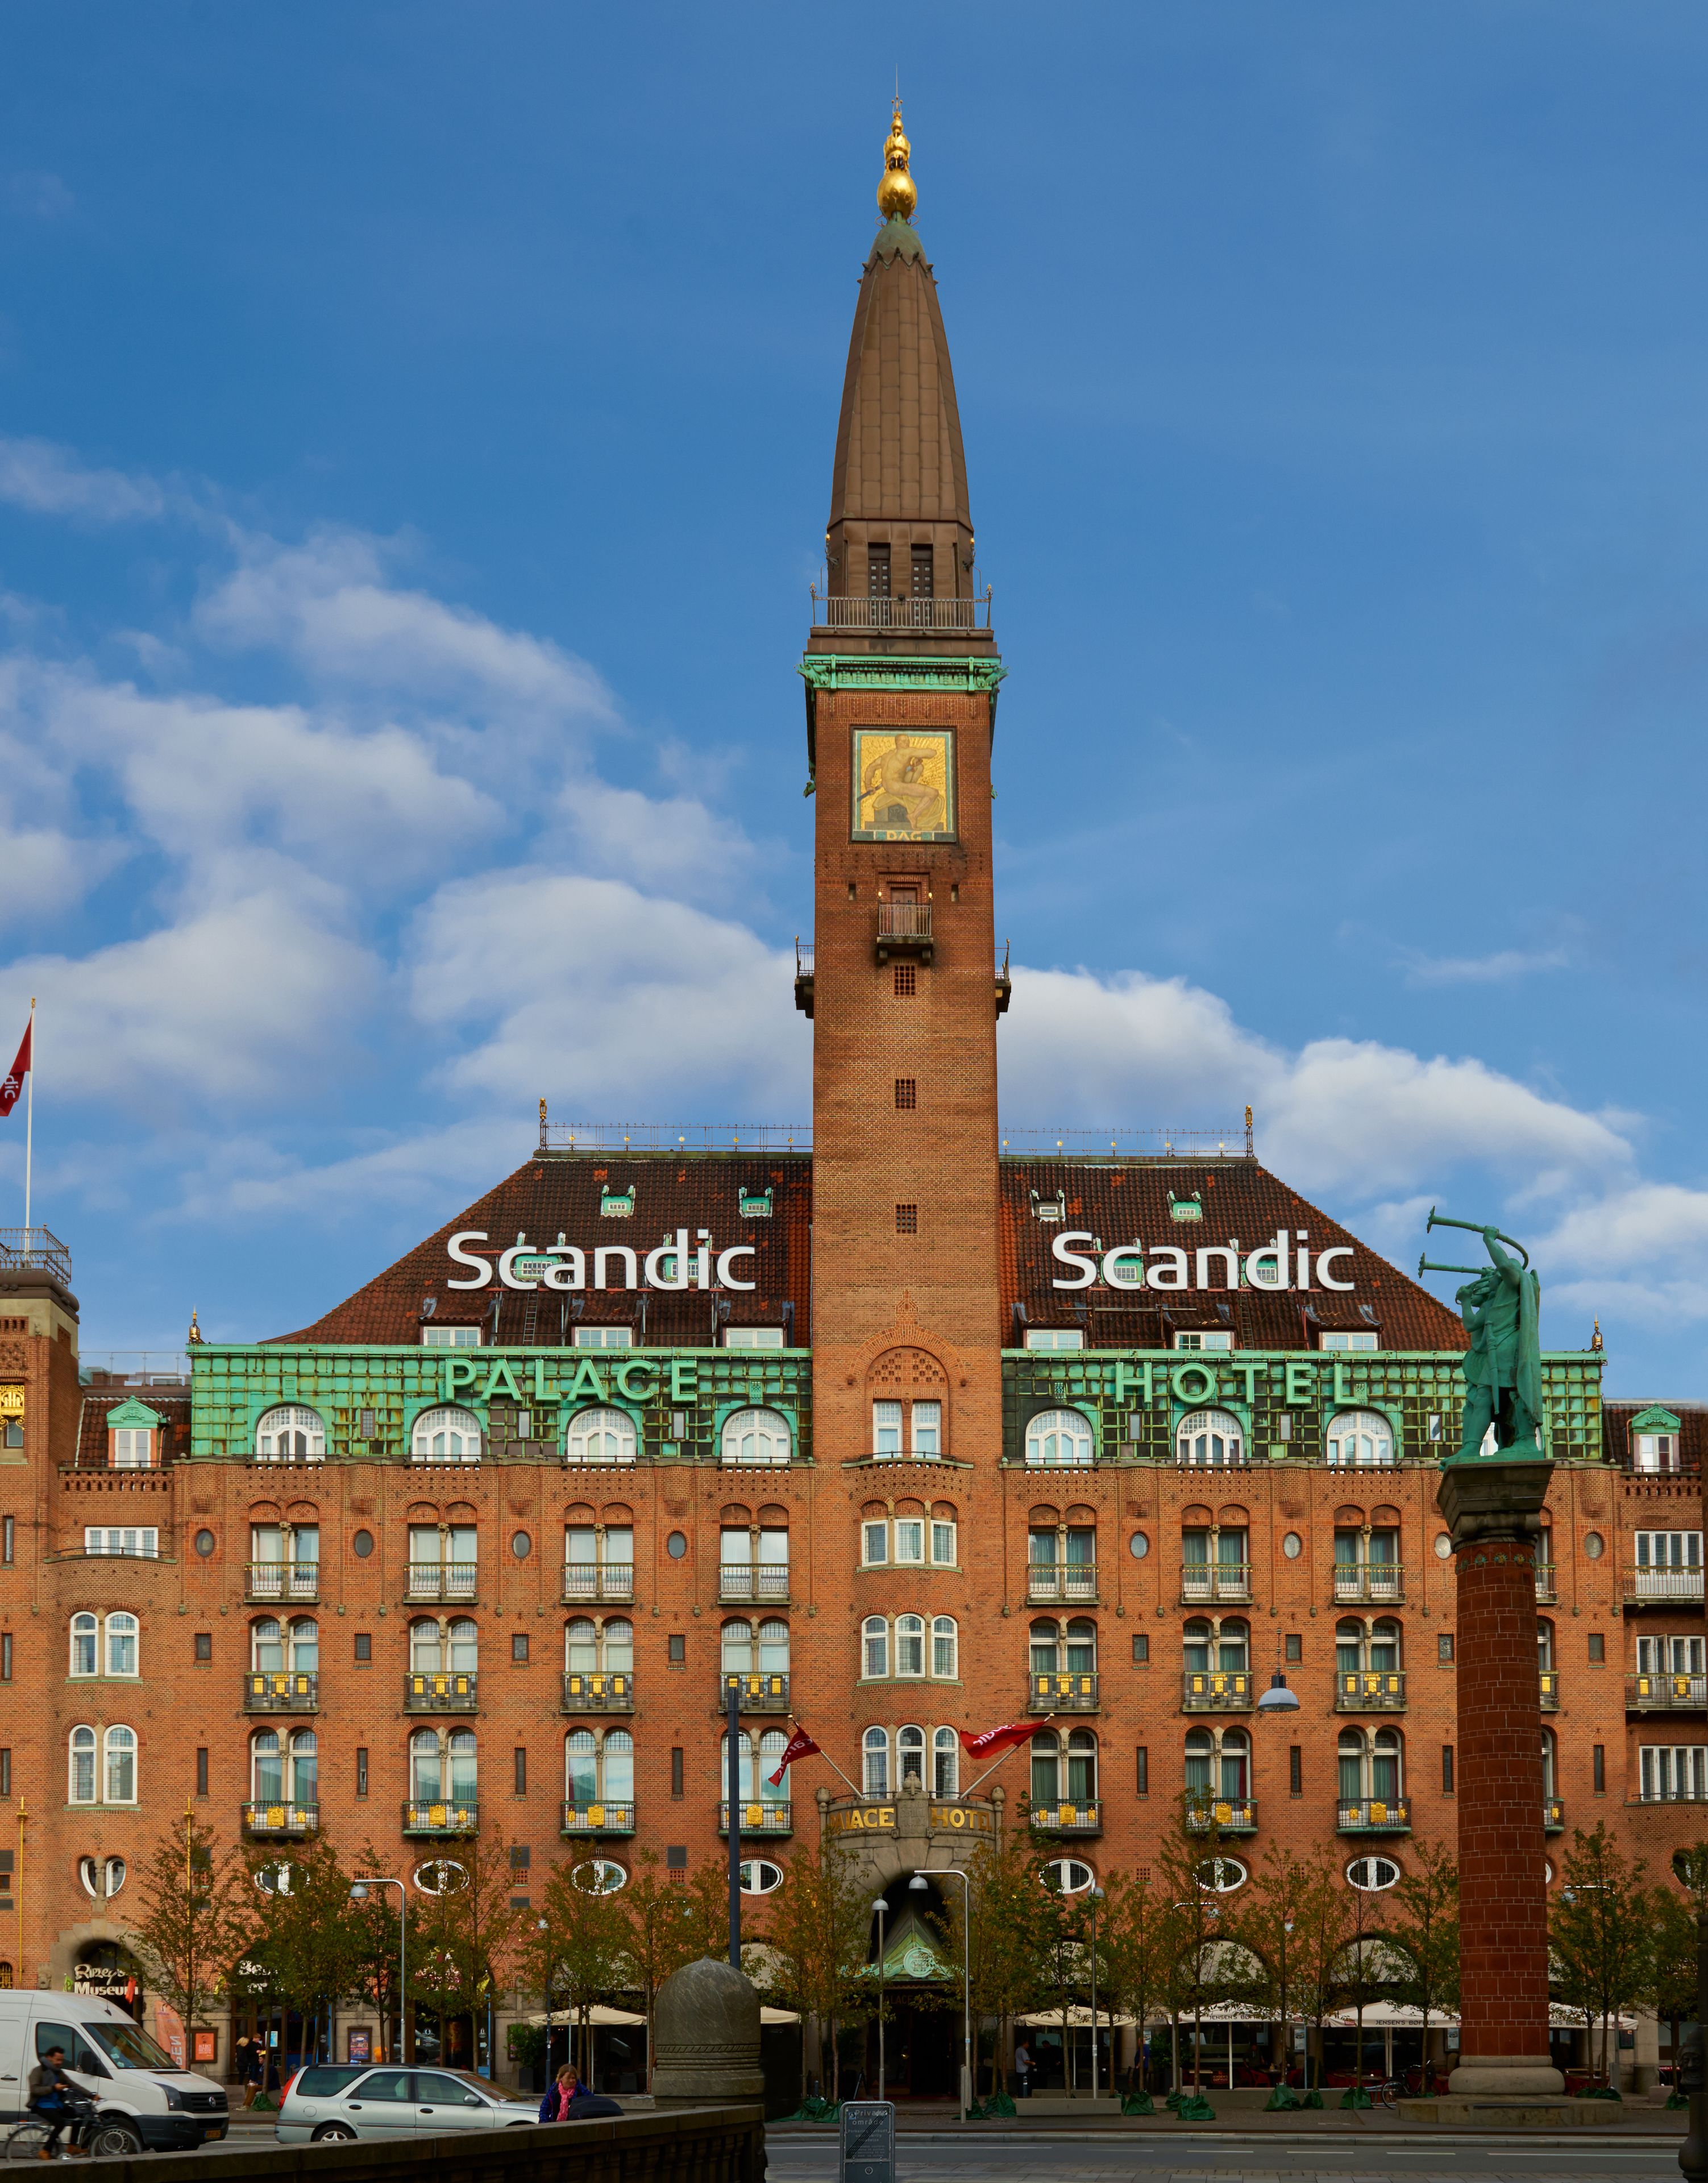 Scandic Palace Hotel